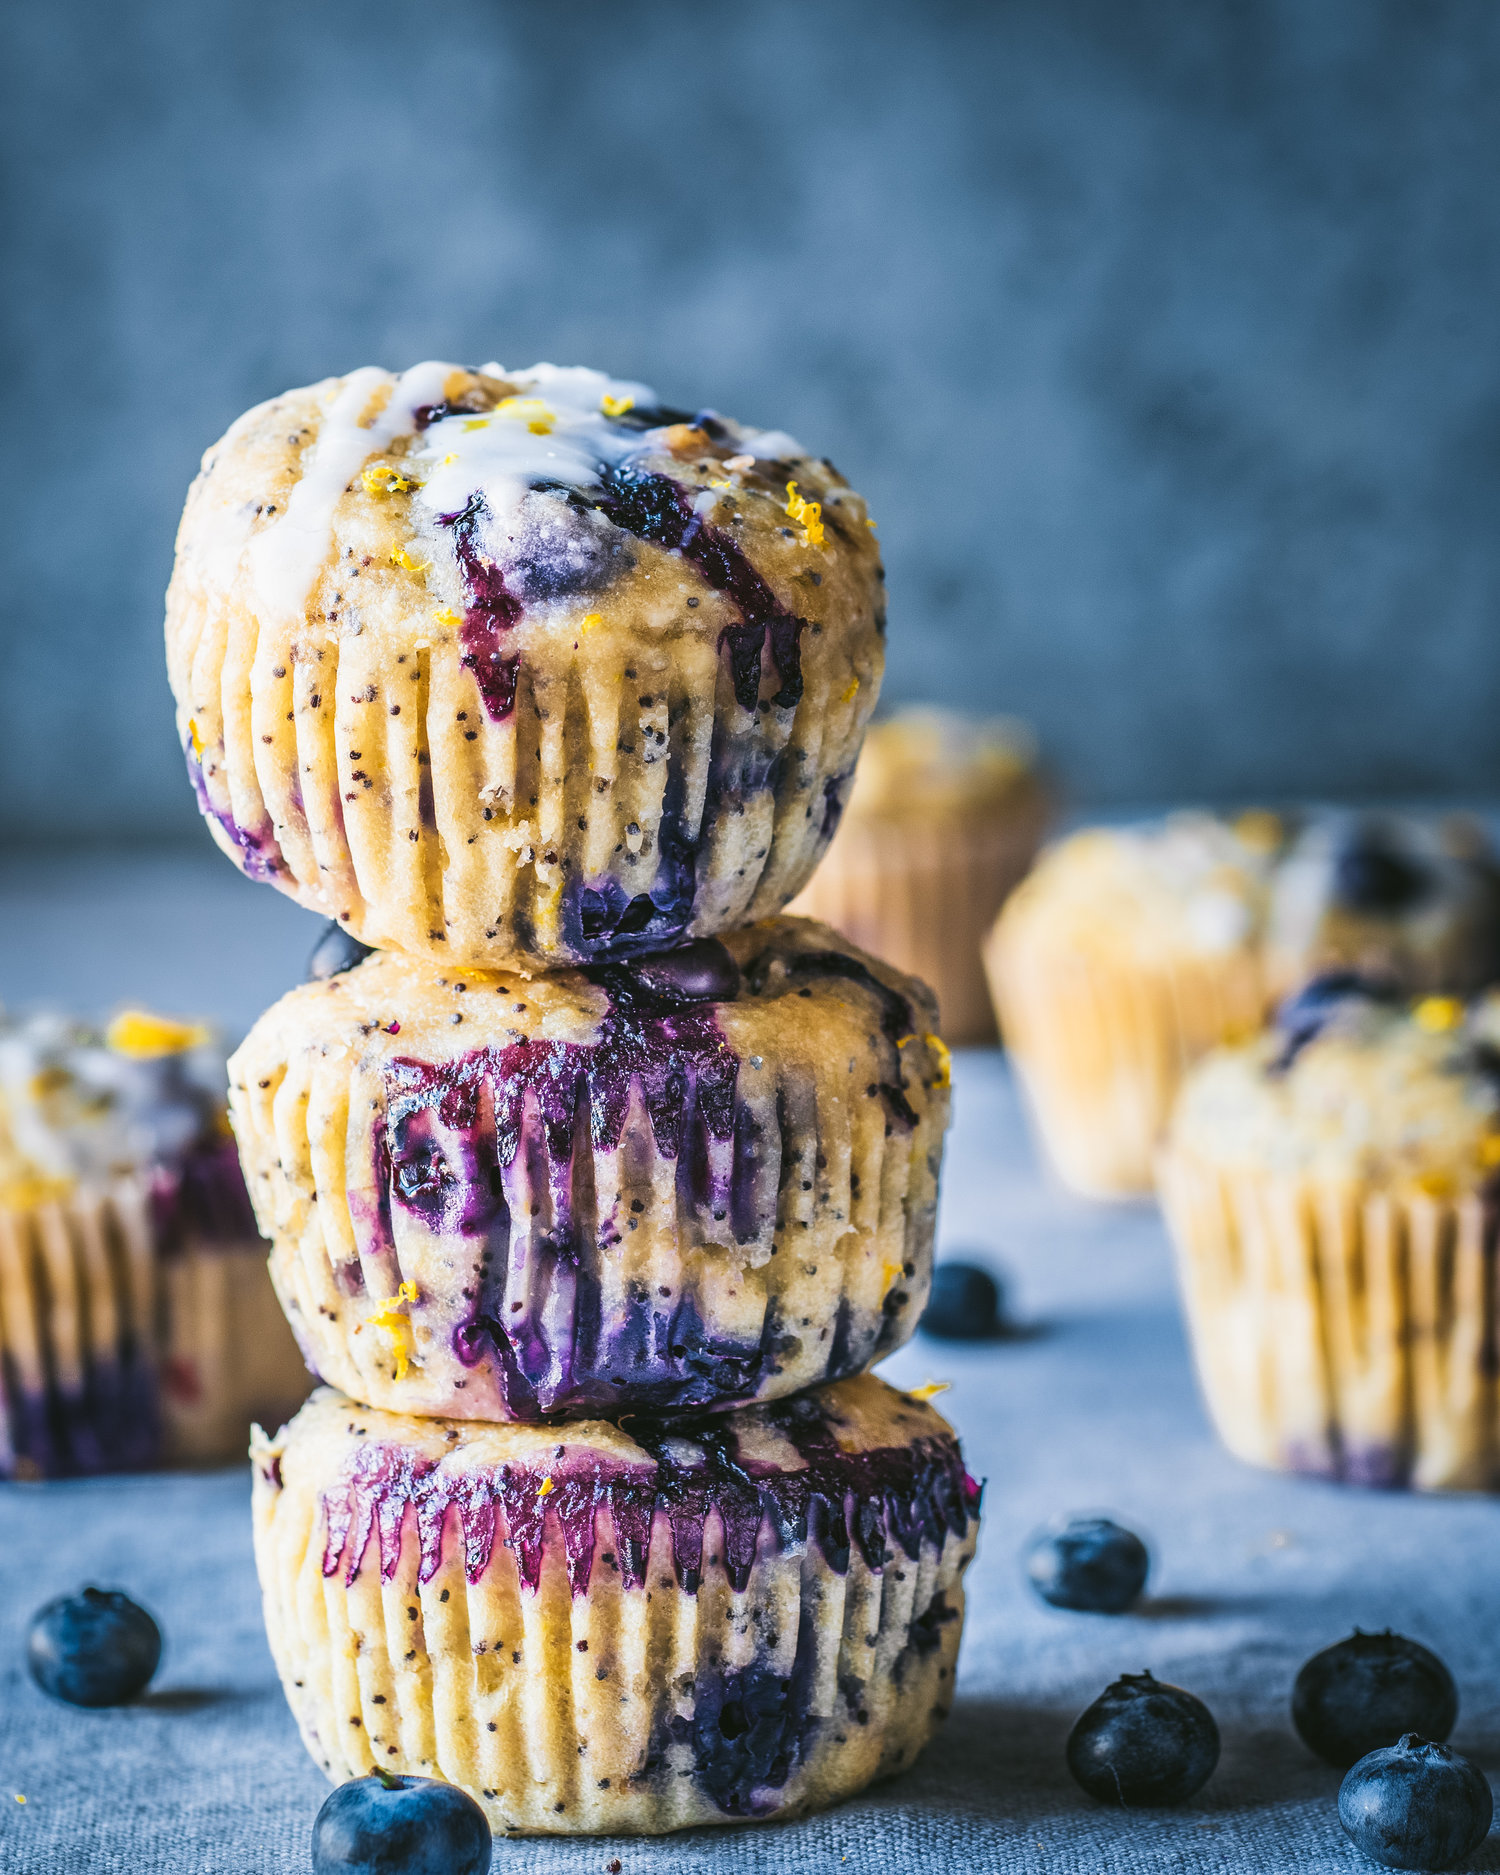 20 Mind-Blowing Vegan Blueberry Desserts to Bake